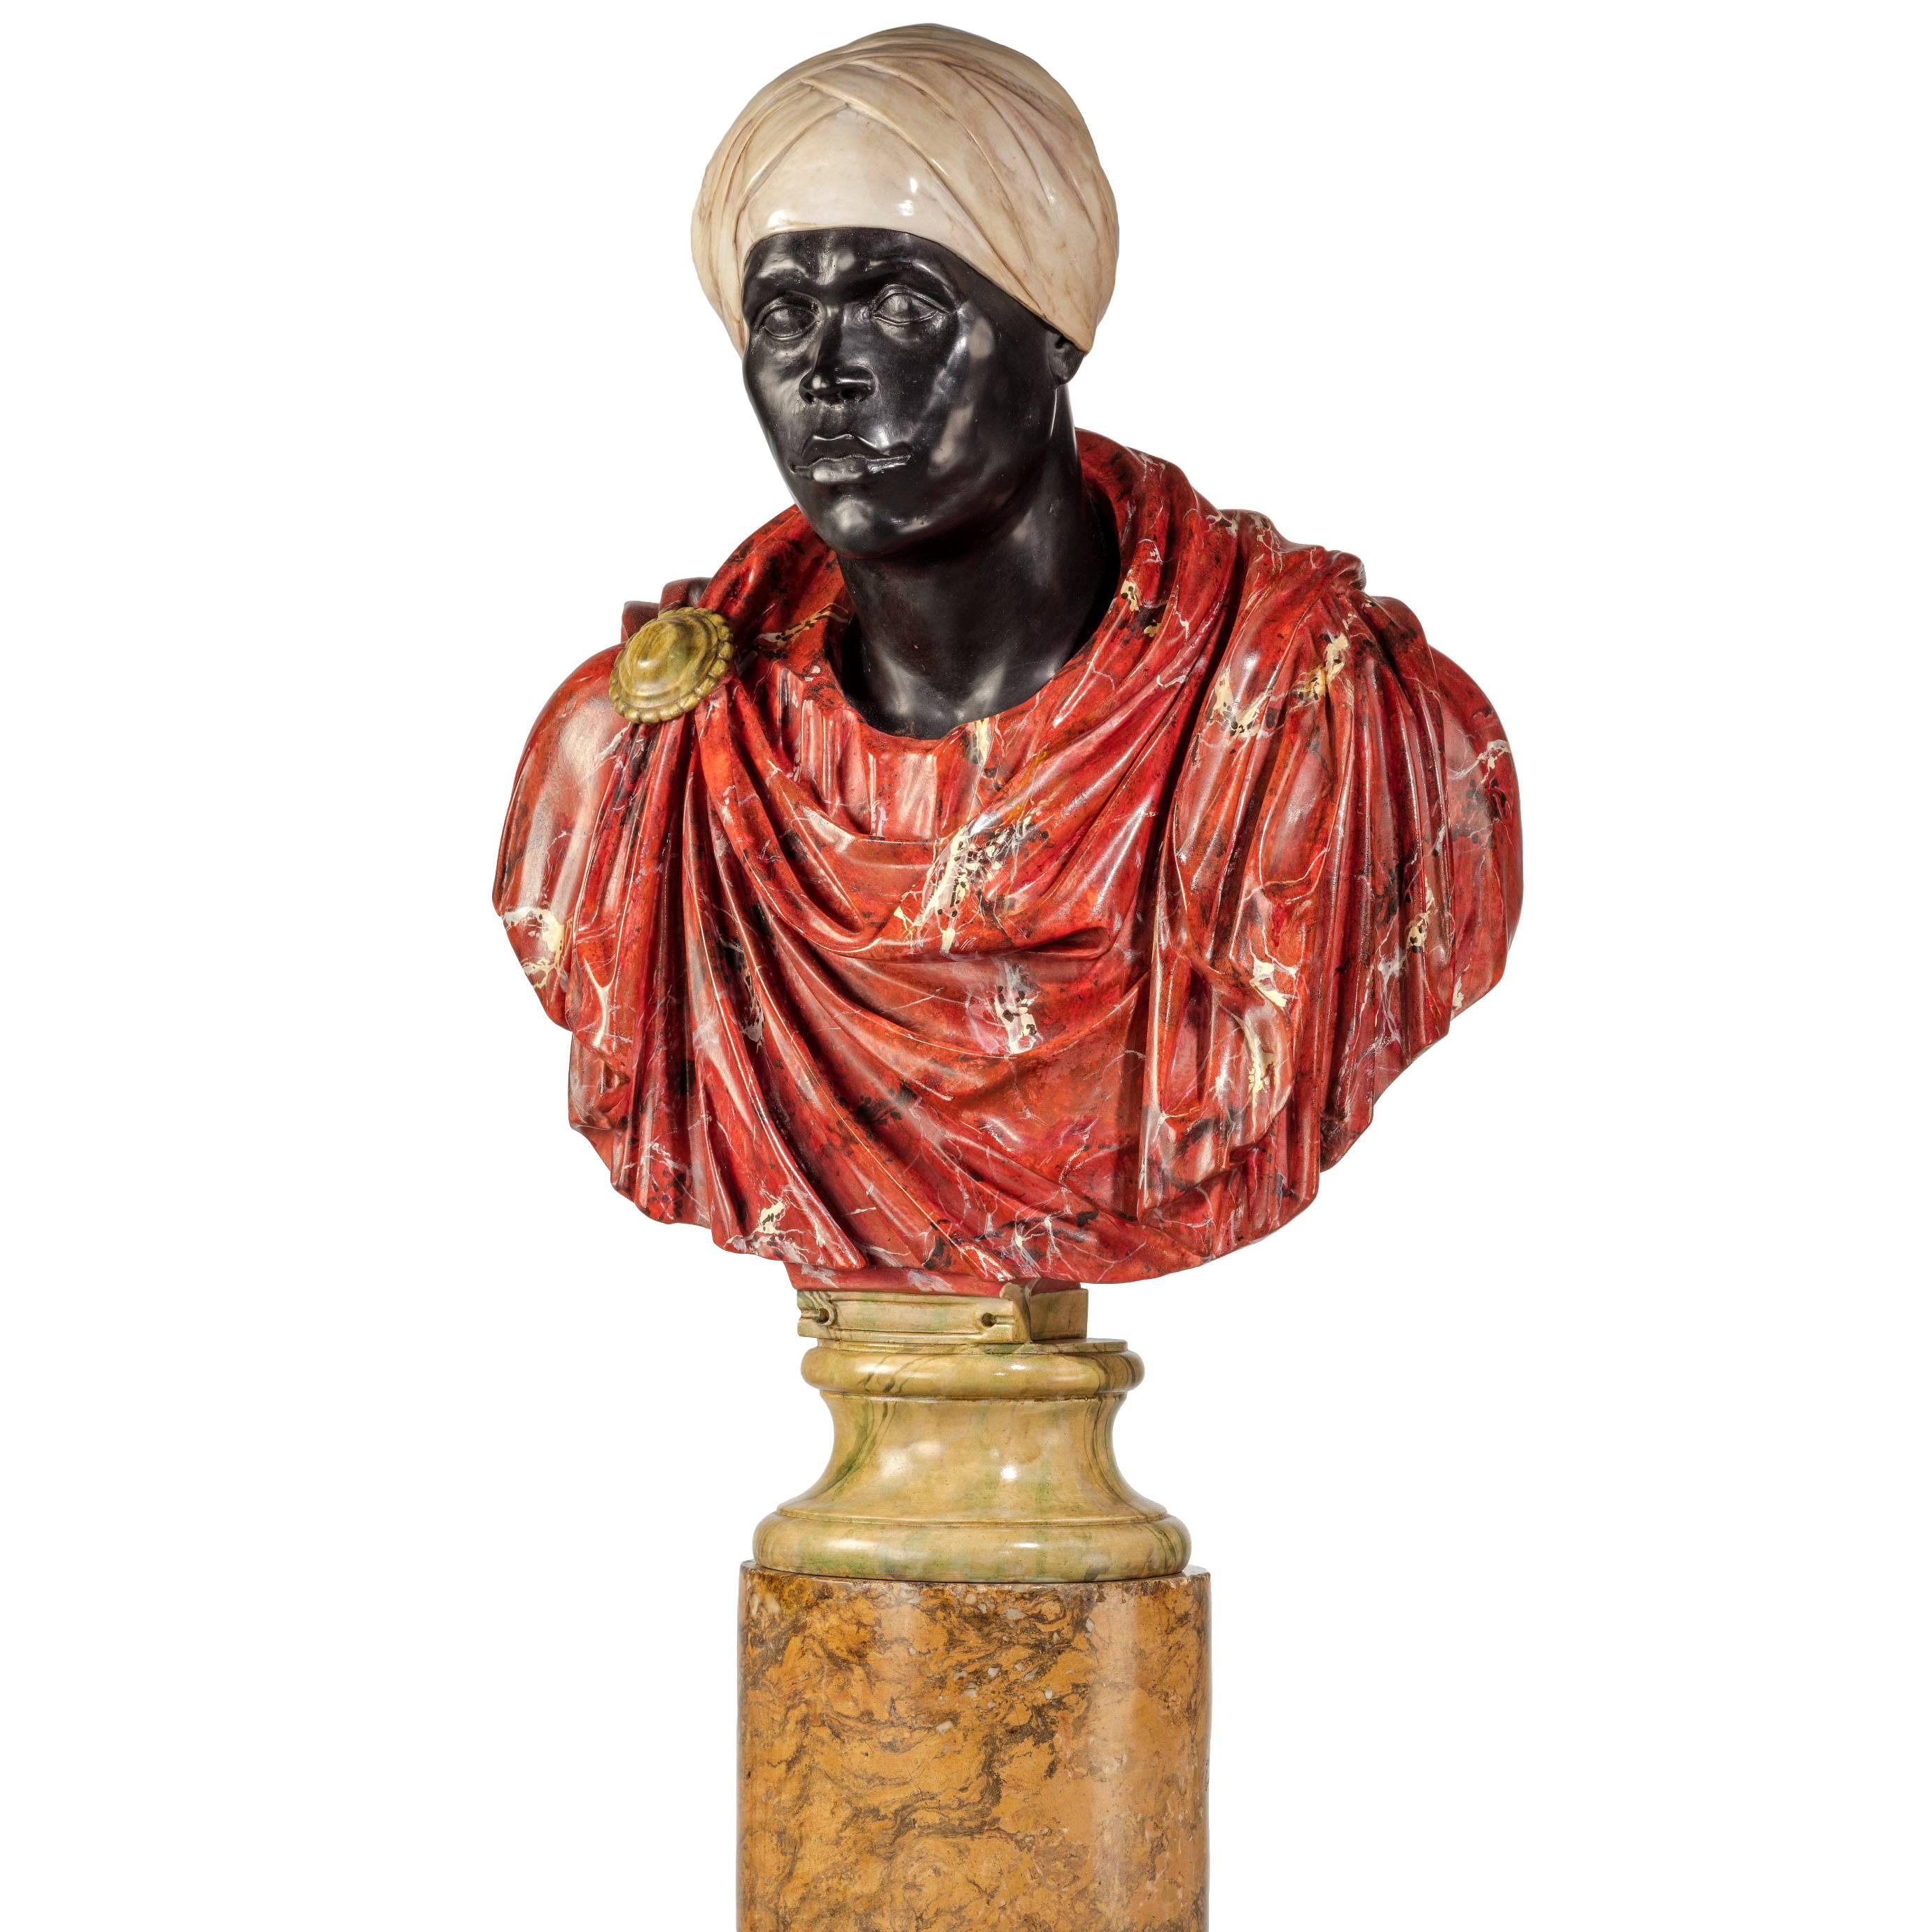 Bust of a High Ranking Roman